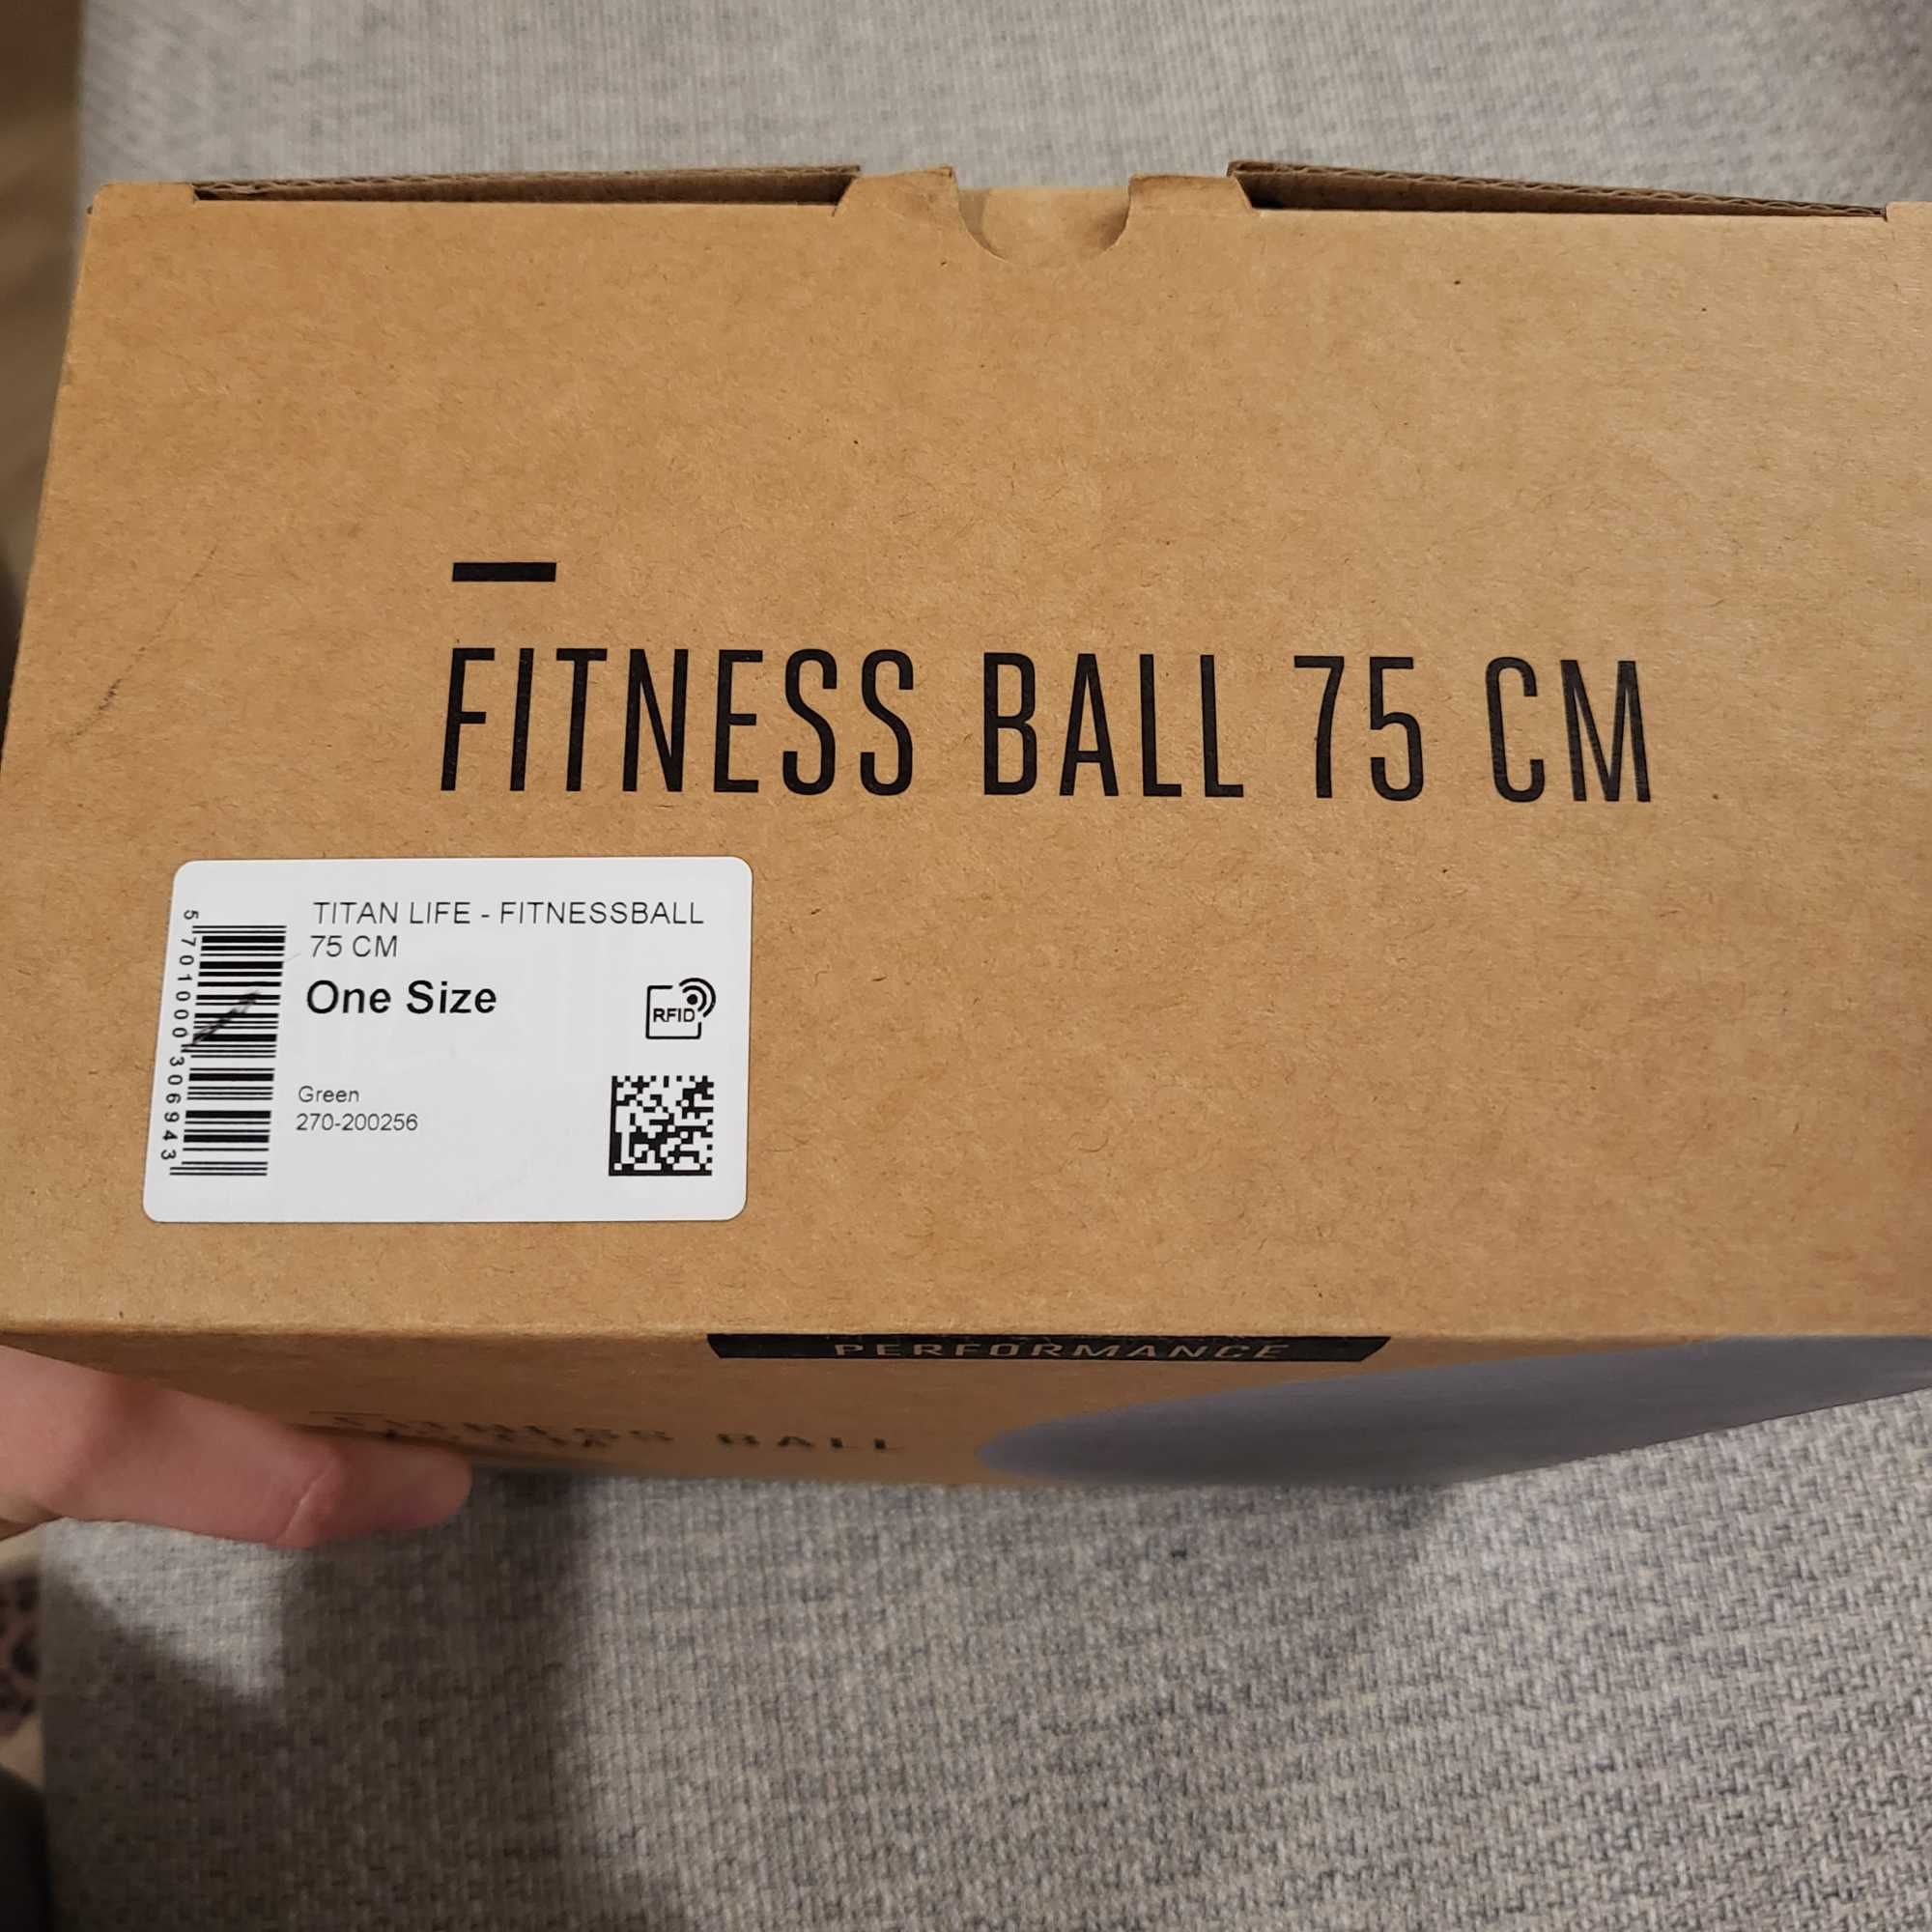 Fitness ball 75cm